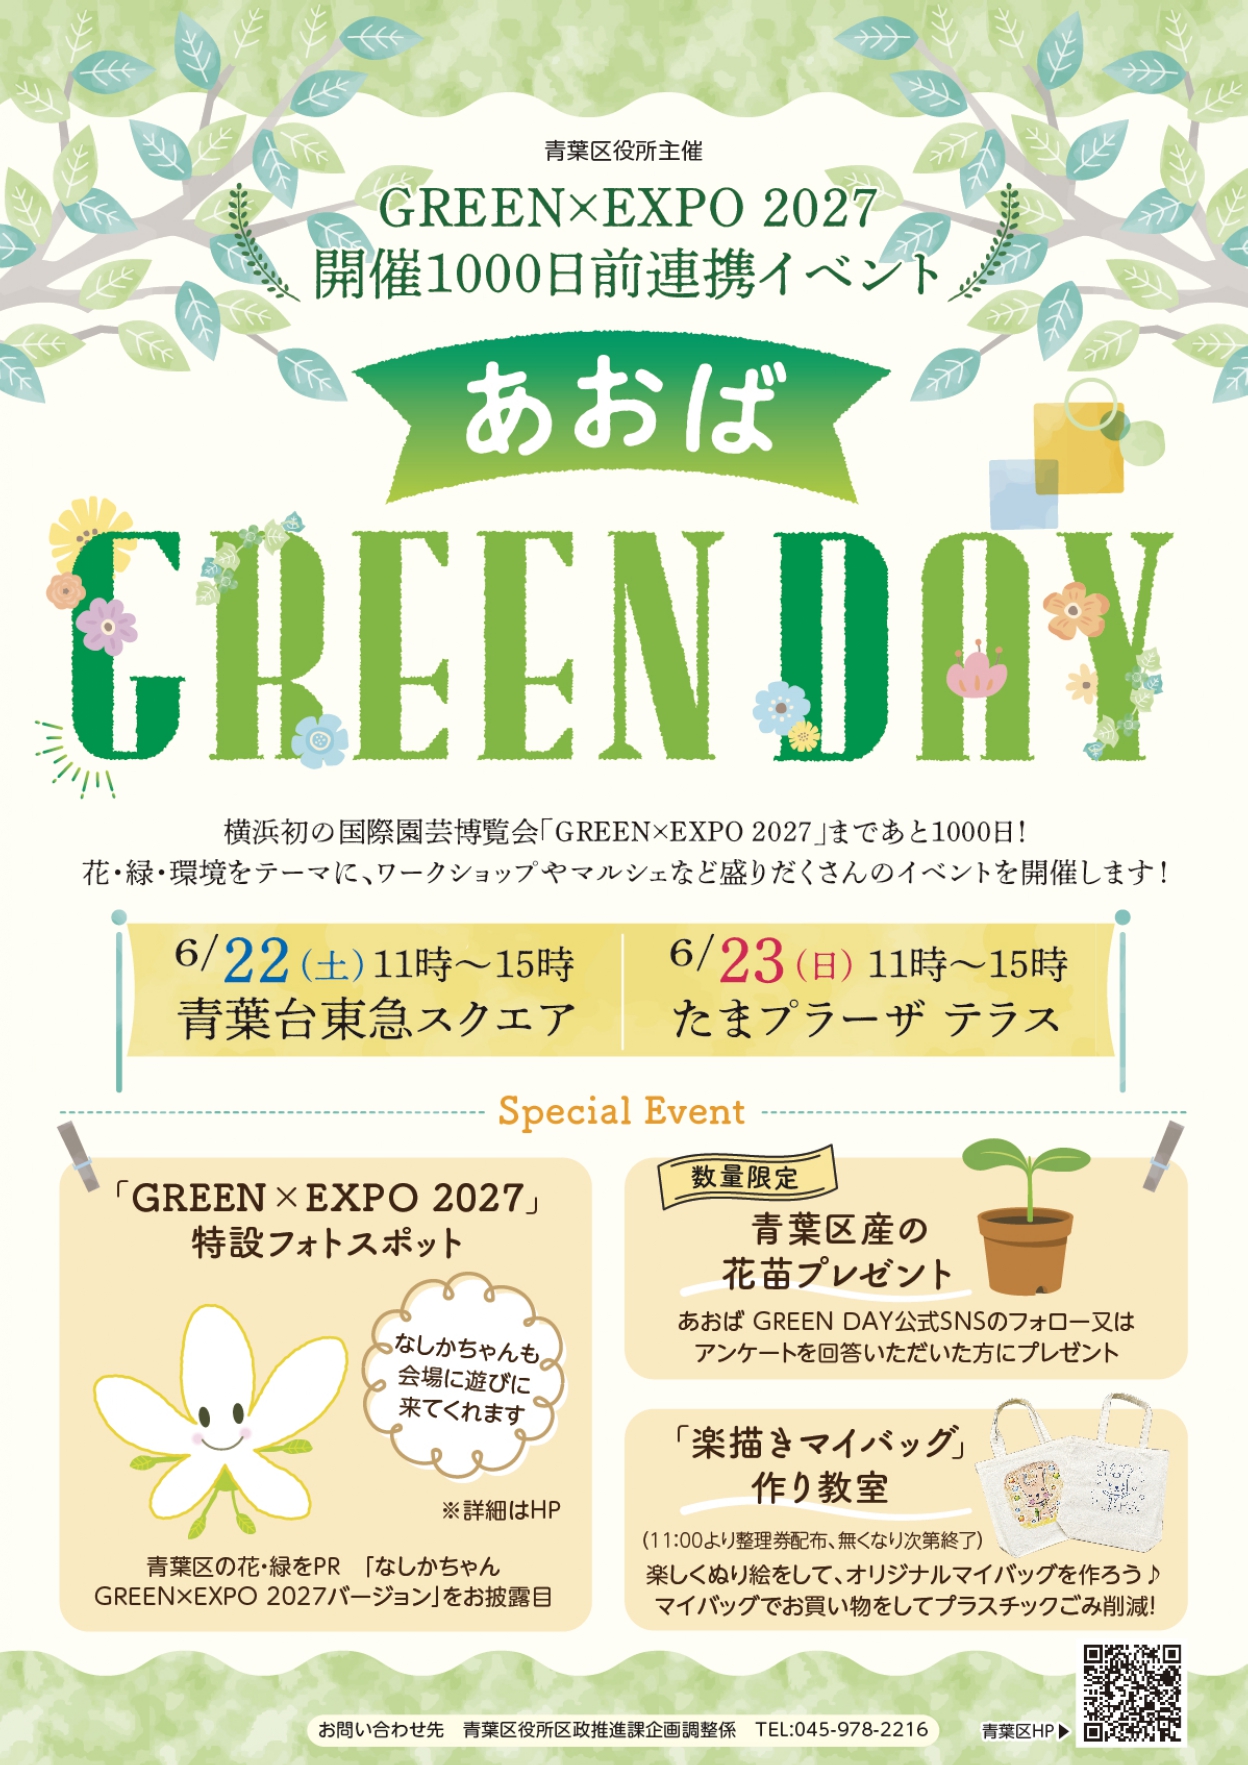 GREEN×EXPO 2027 記念イベント「あおば GREEN DAY」